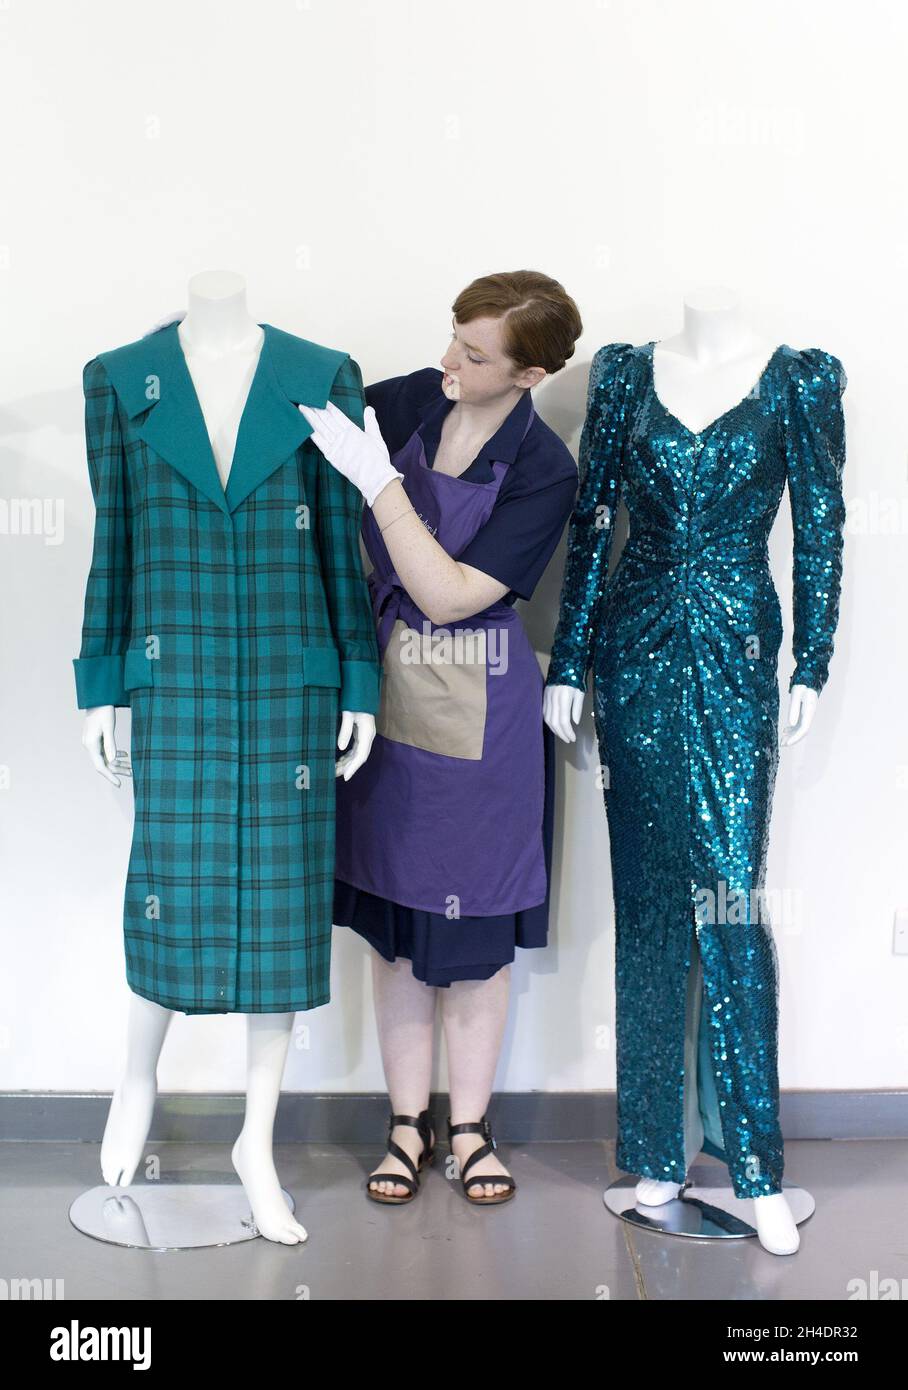 Bonhams : Channel Princess Diana's Style with Vintage Chanel at Bonhams